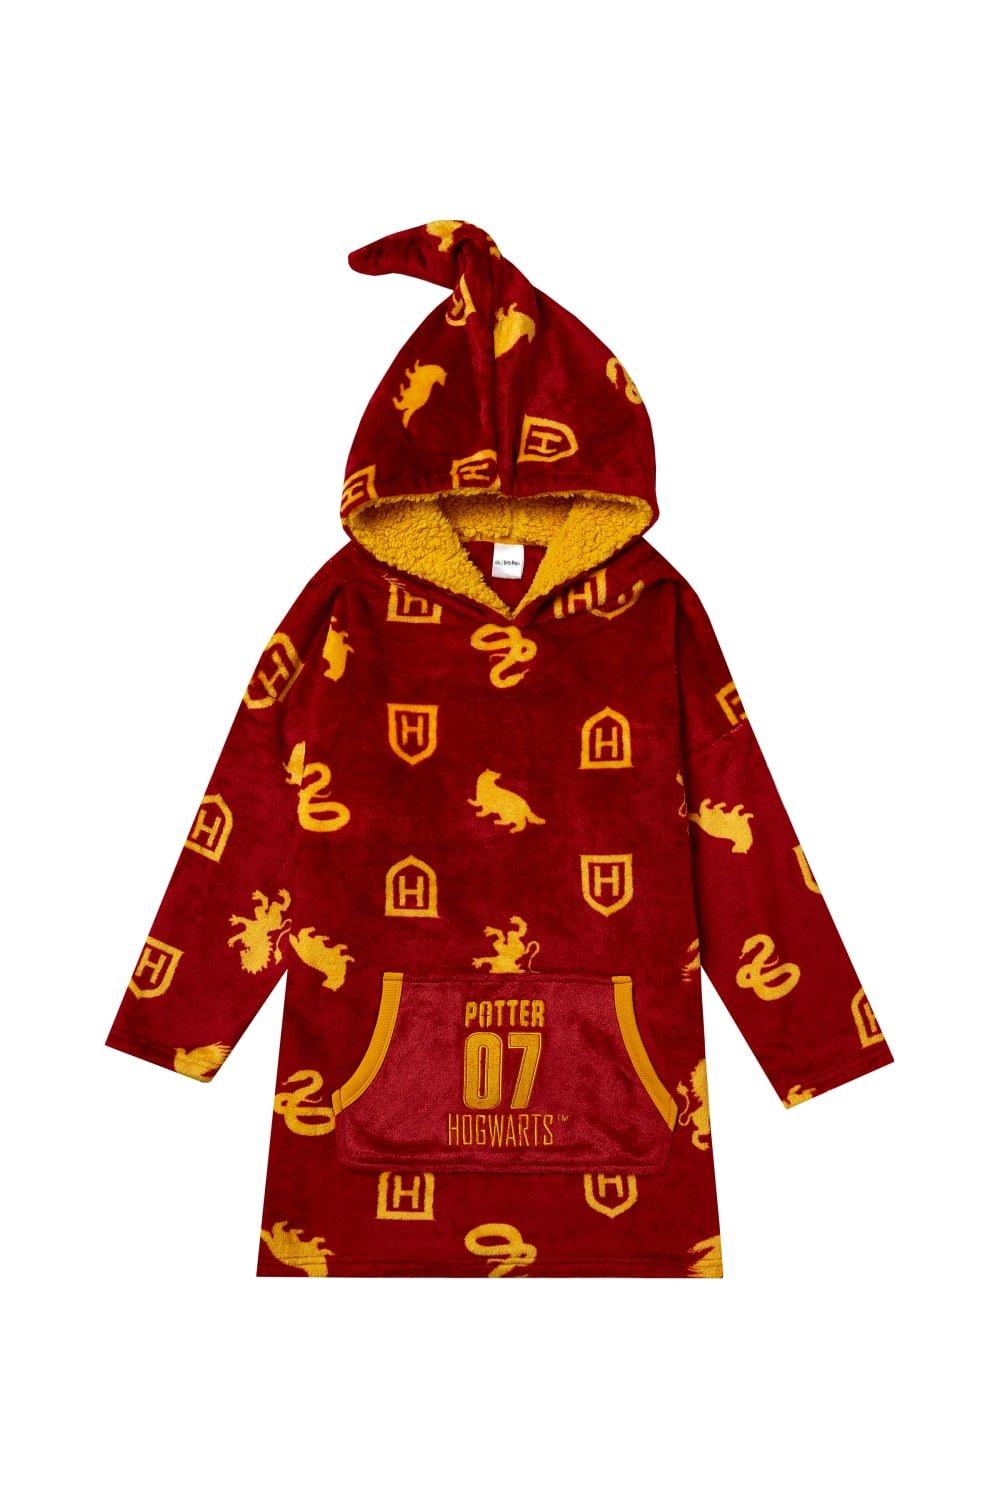 Hogwarts Pattern Blanket Hoodie Oversized Fleece Ultra Soft and Cosy